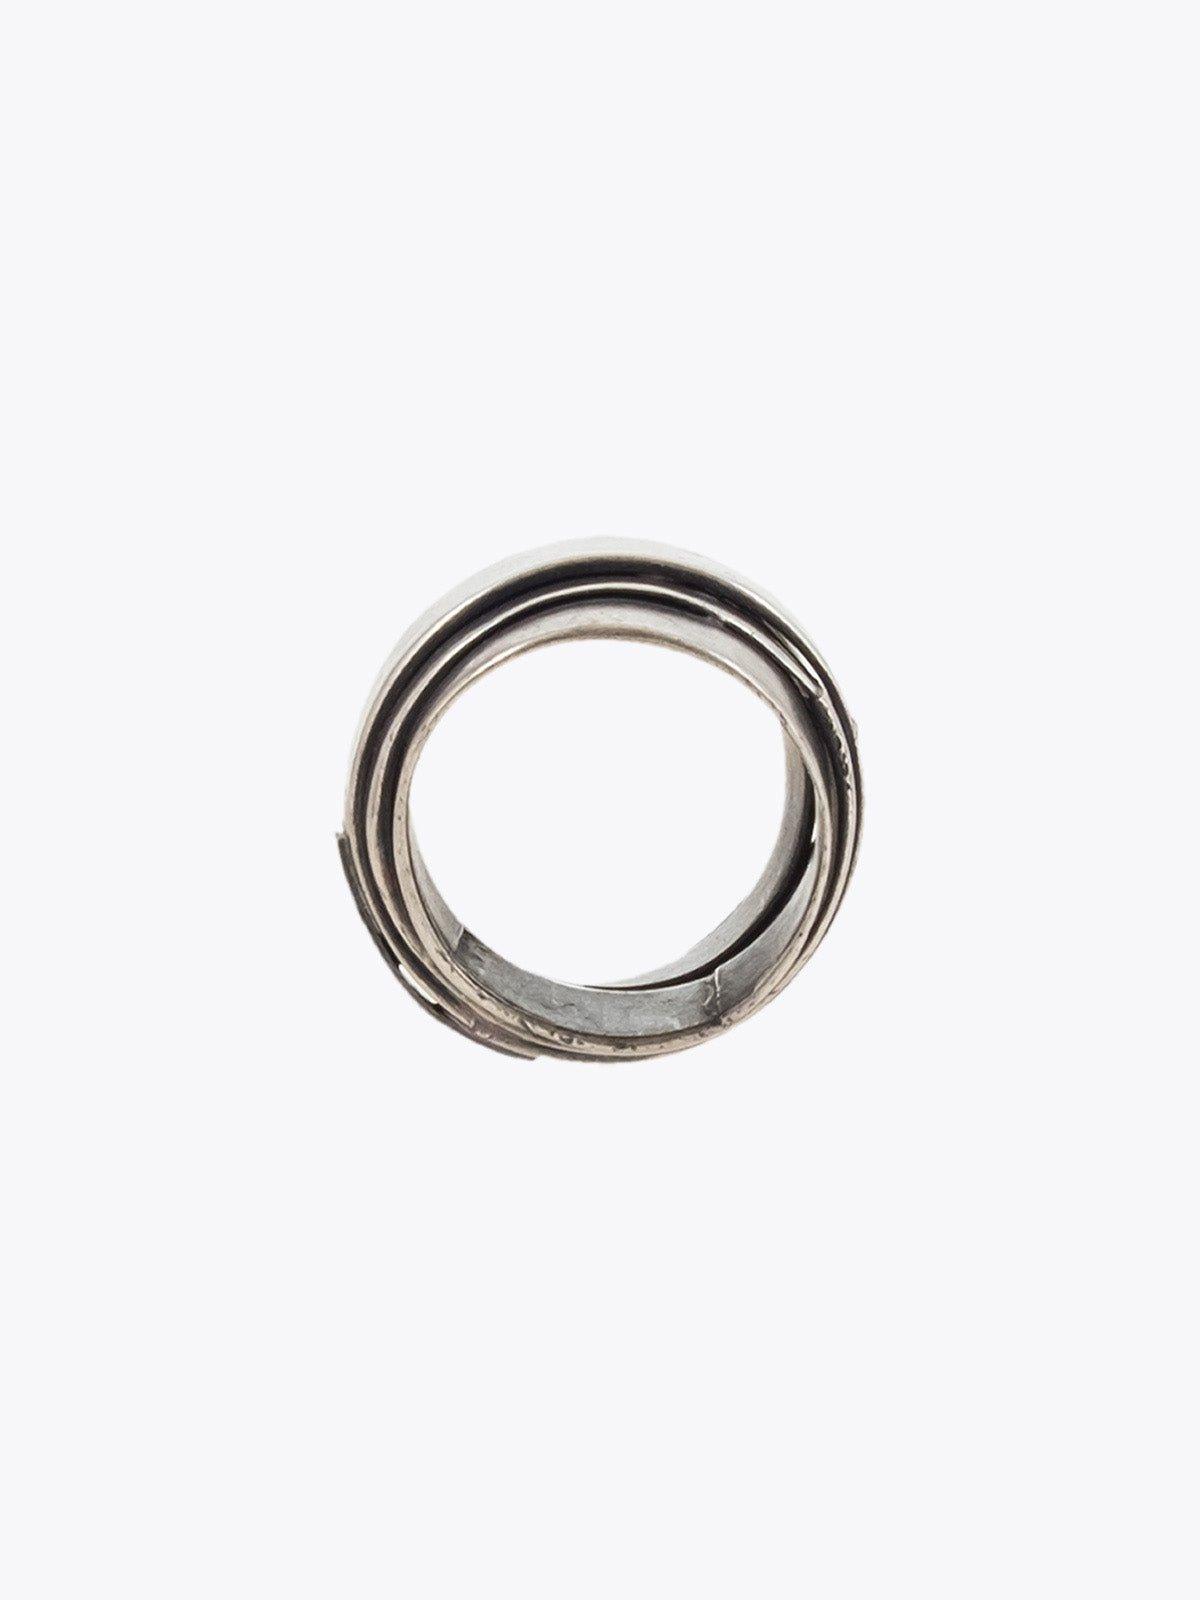 GOTI AN503 Oxidised Silver Ring